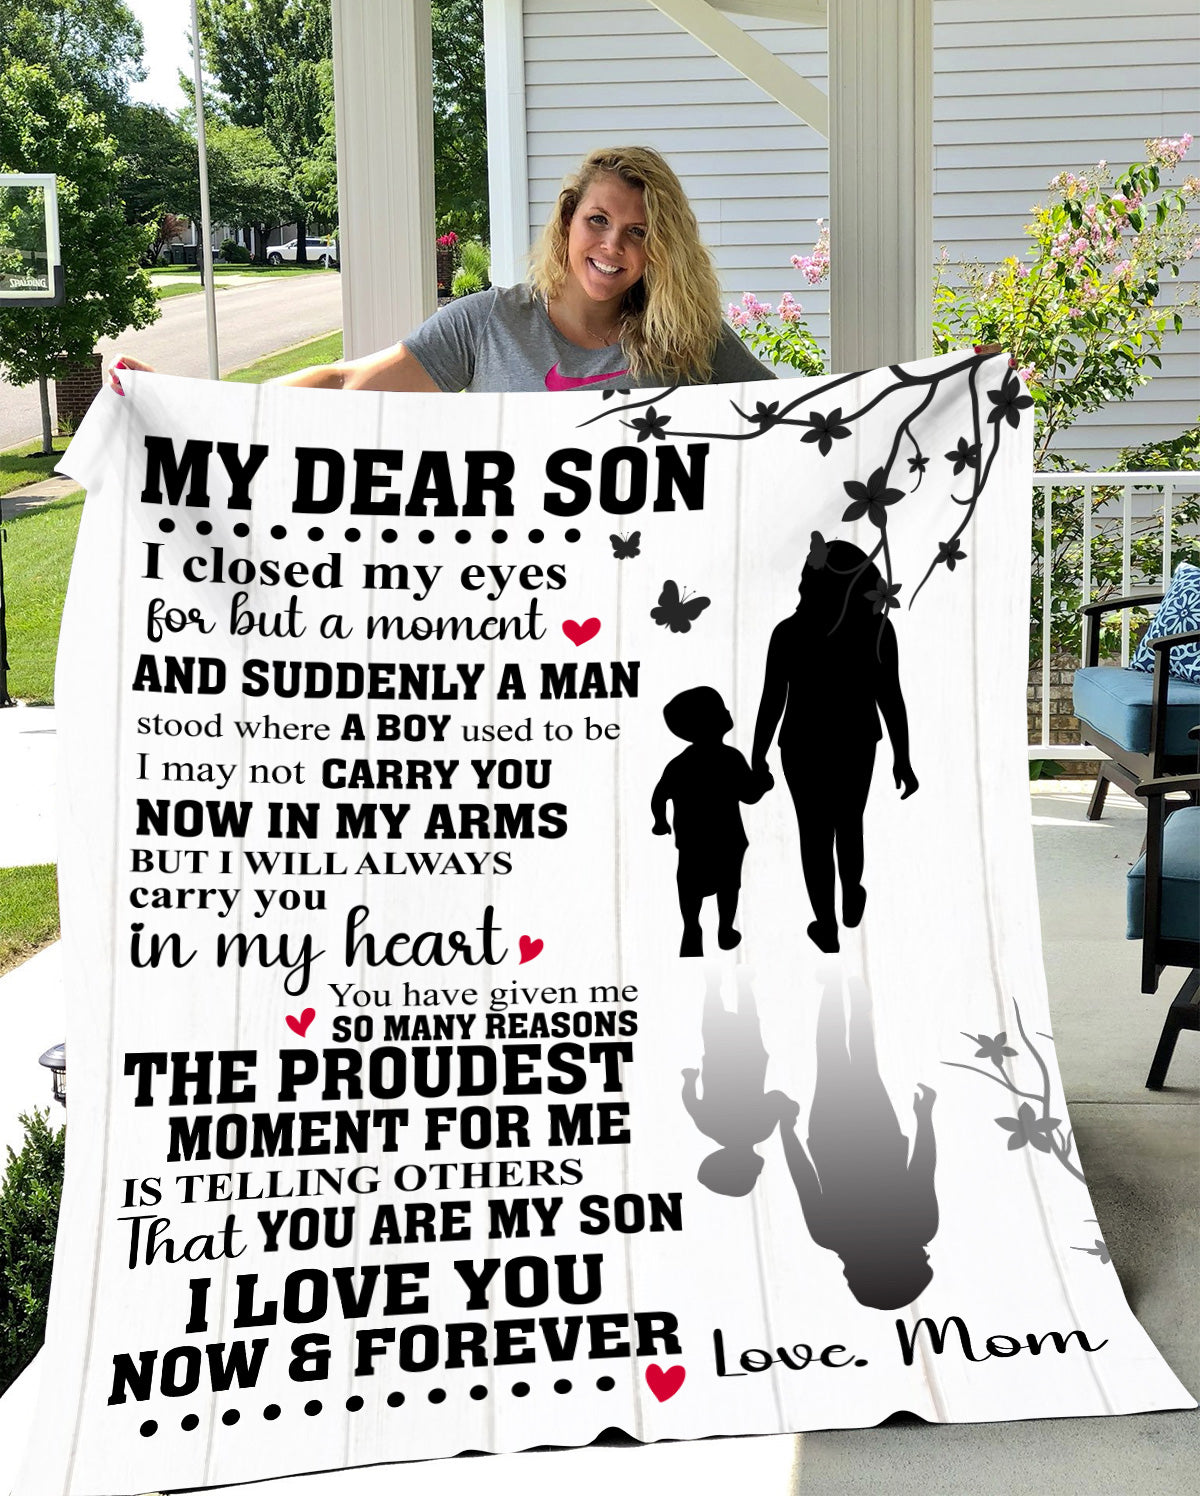 My Dear Son | I Love You Now & Forever - Arctic Fleece Blanket 50x60